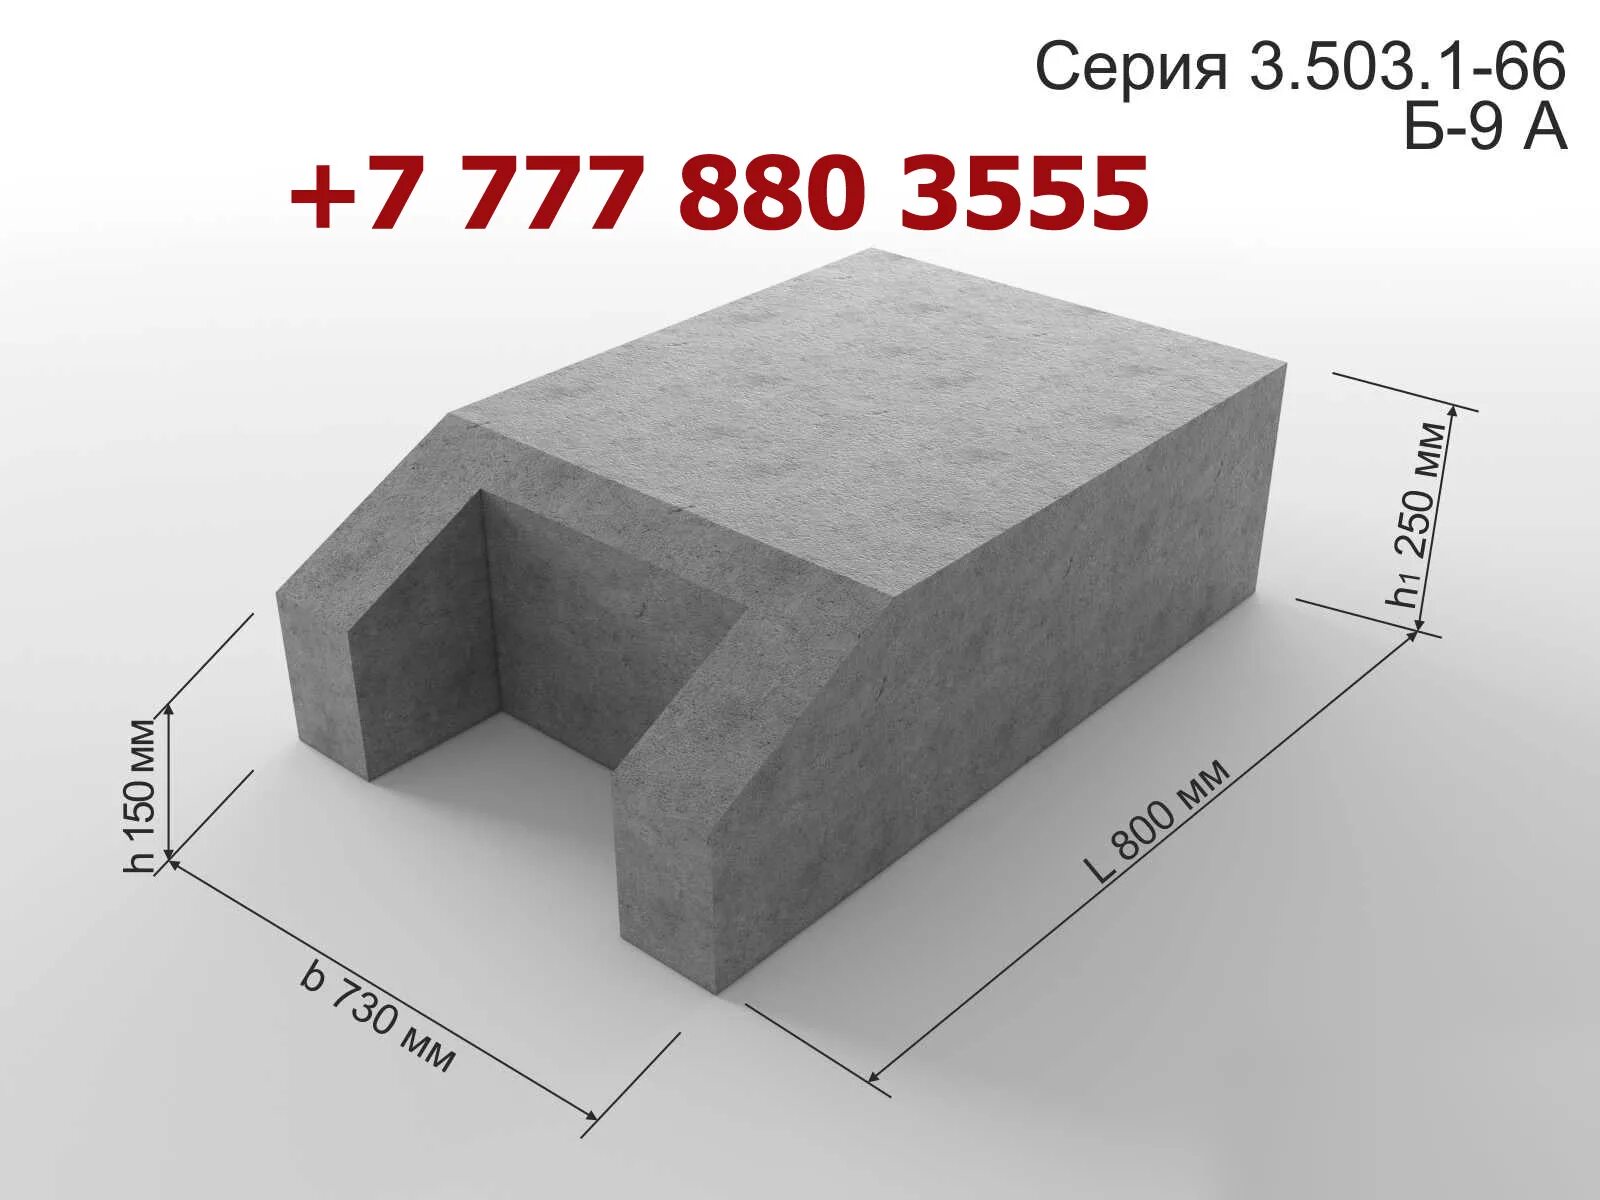 Бетонный блок б-6 3.503.1.66. Блок упора б-9. Блок бетонный б-9 (3.503.1-66-9.0.0сб). Блоки упора бетонные б-9.